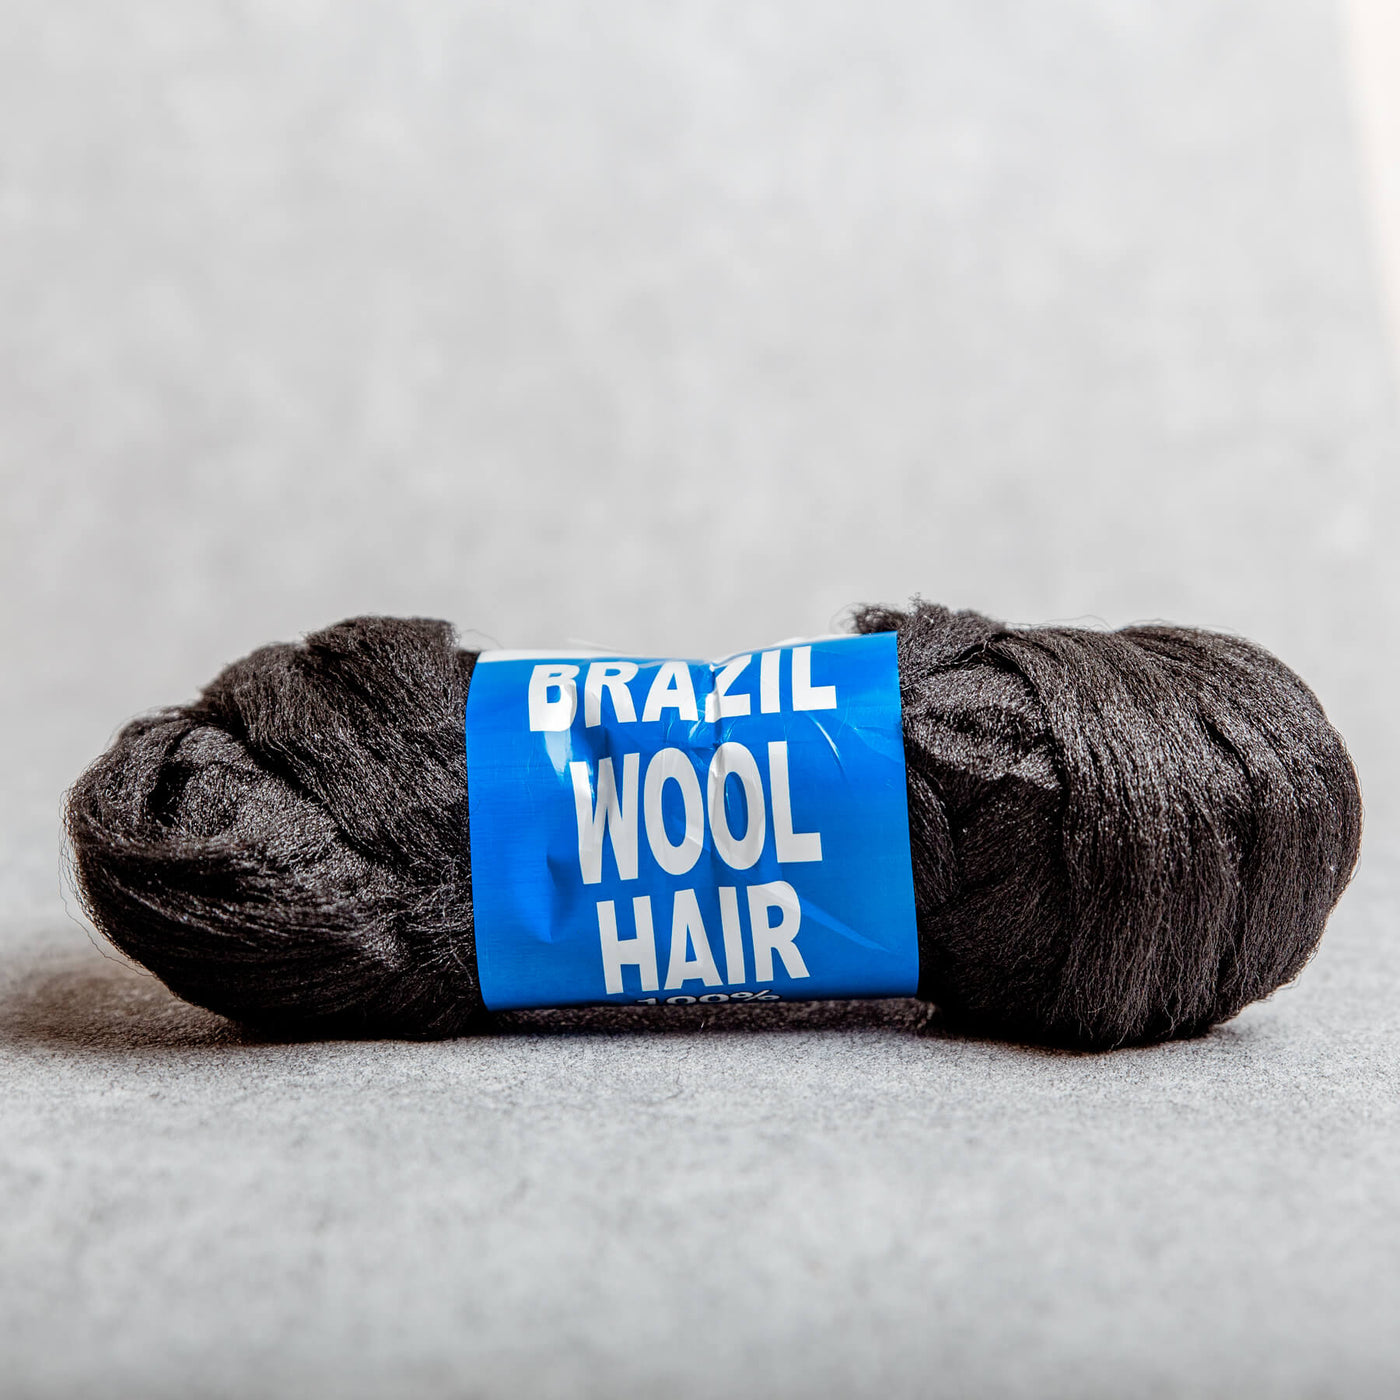 Black Brazilian Wool Hair